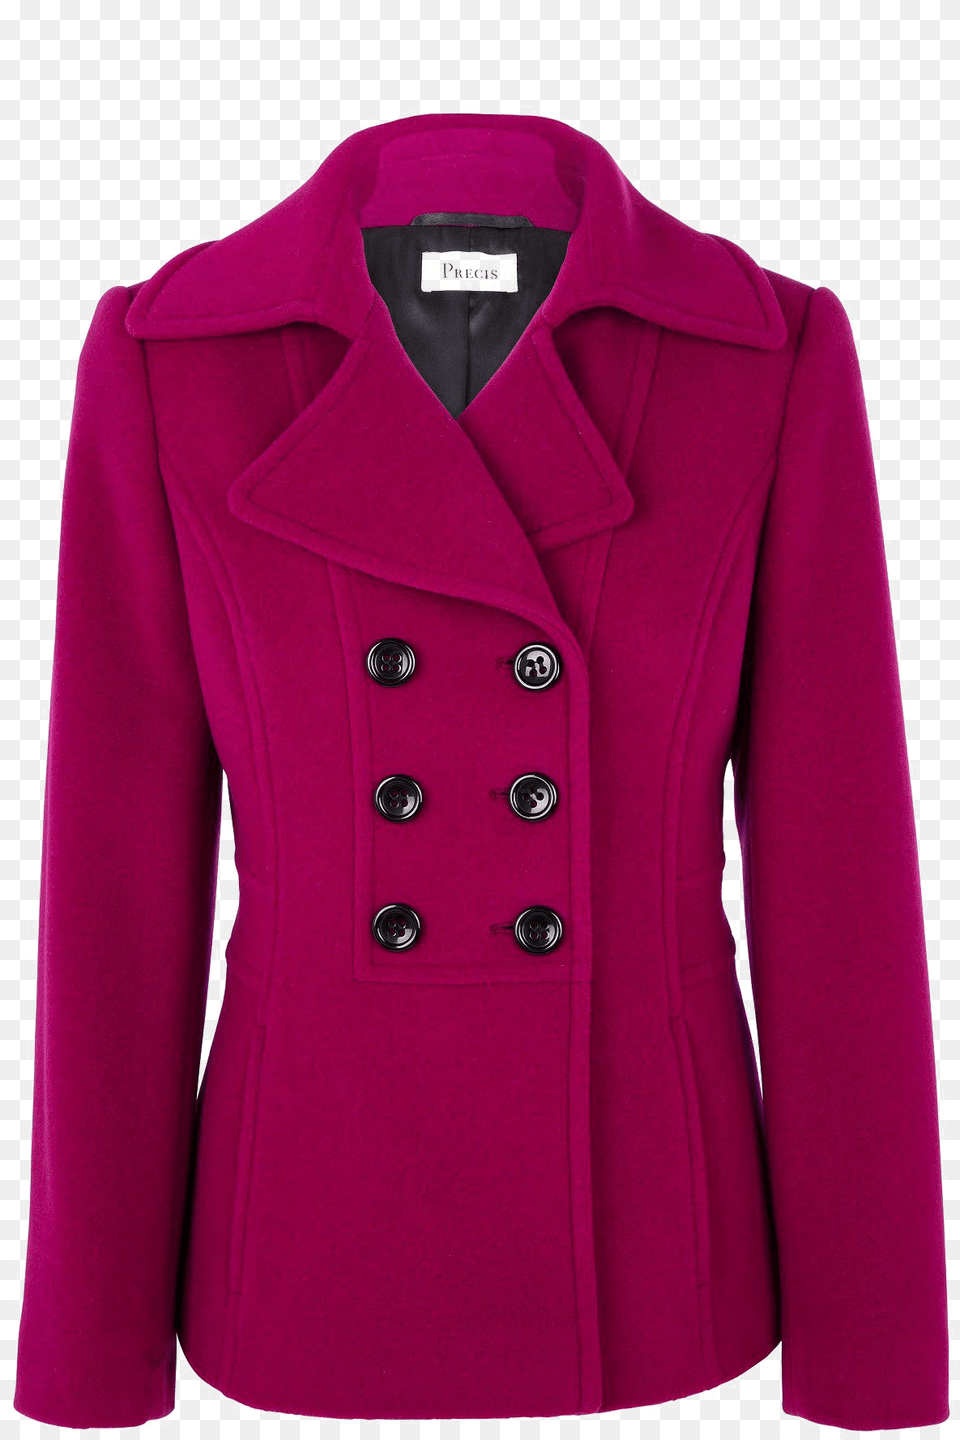 Short Coat For Women Image With Transparent Background Coat For Women, Clothing, Jacket, Overcoat, Blazer Png